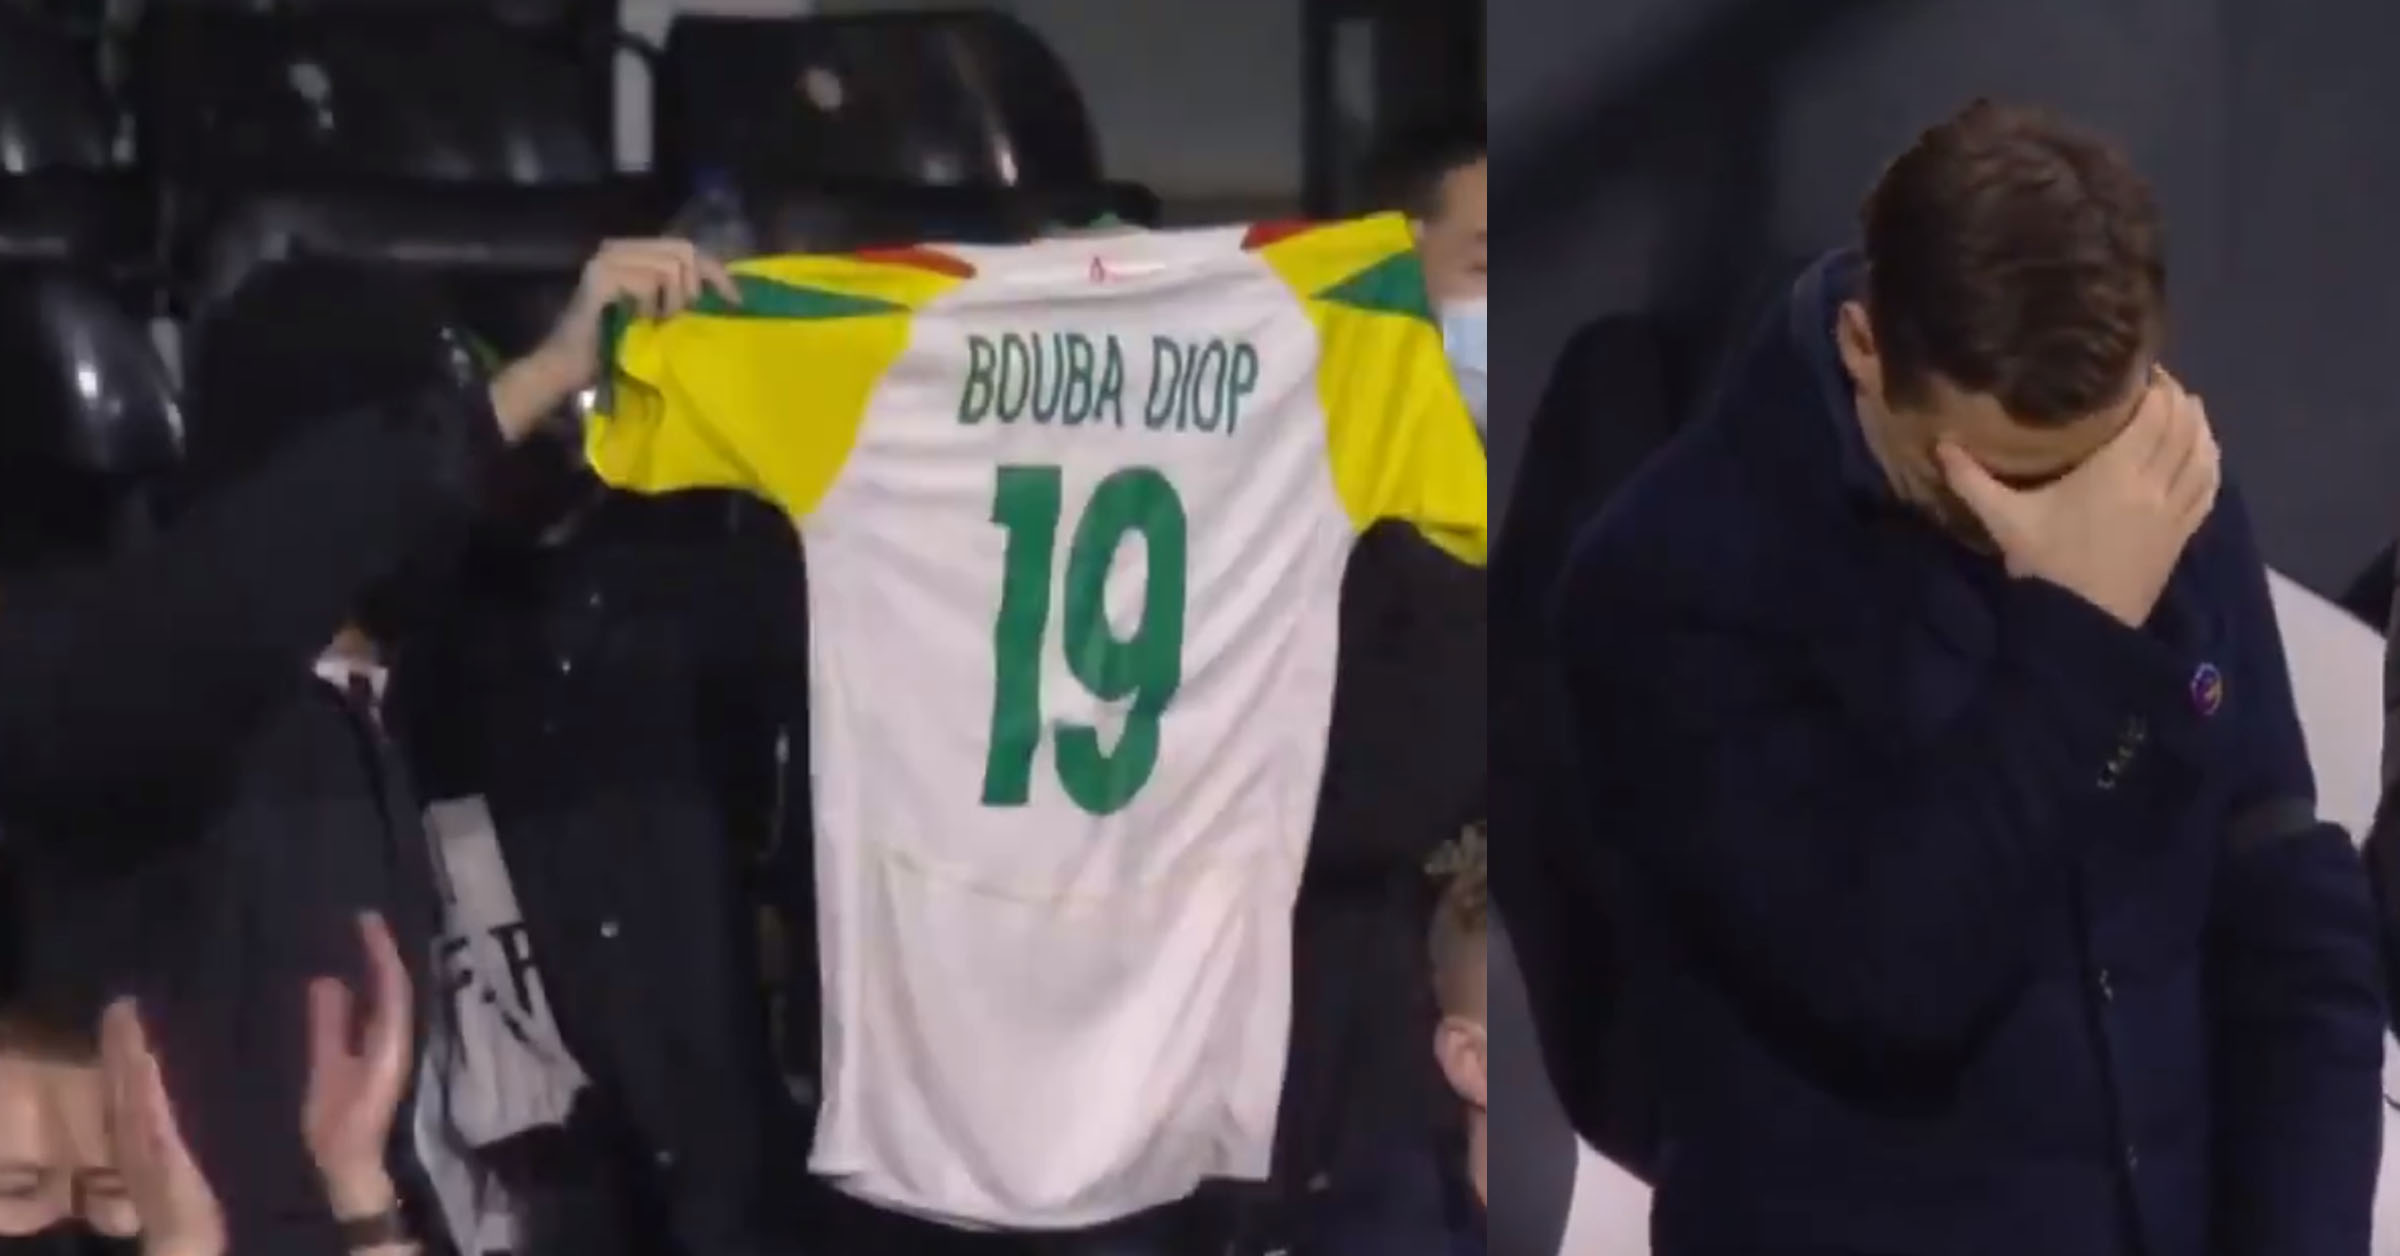 Sadio paying tributes to Papa Bouba Diop 🙏 : r/LiverpoolFC